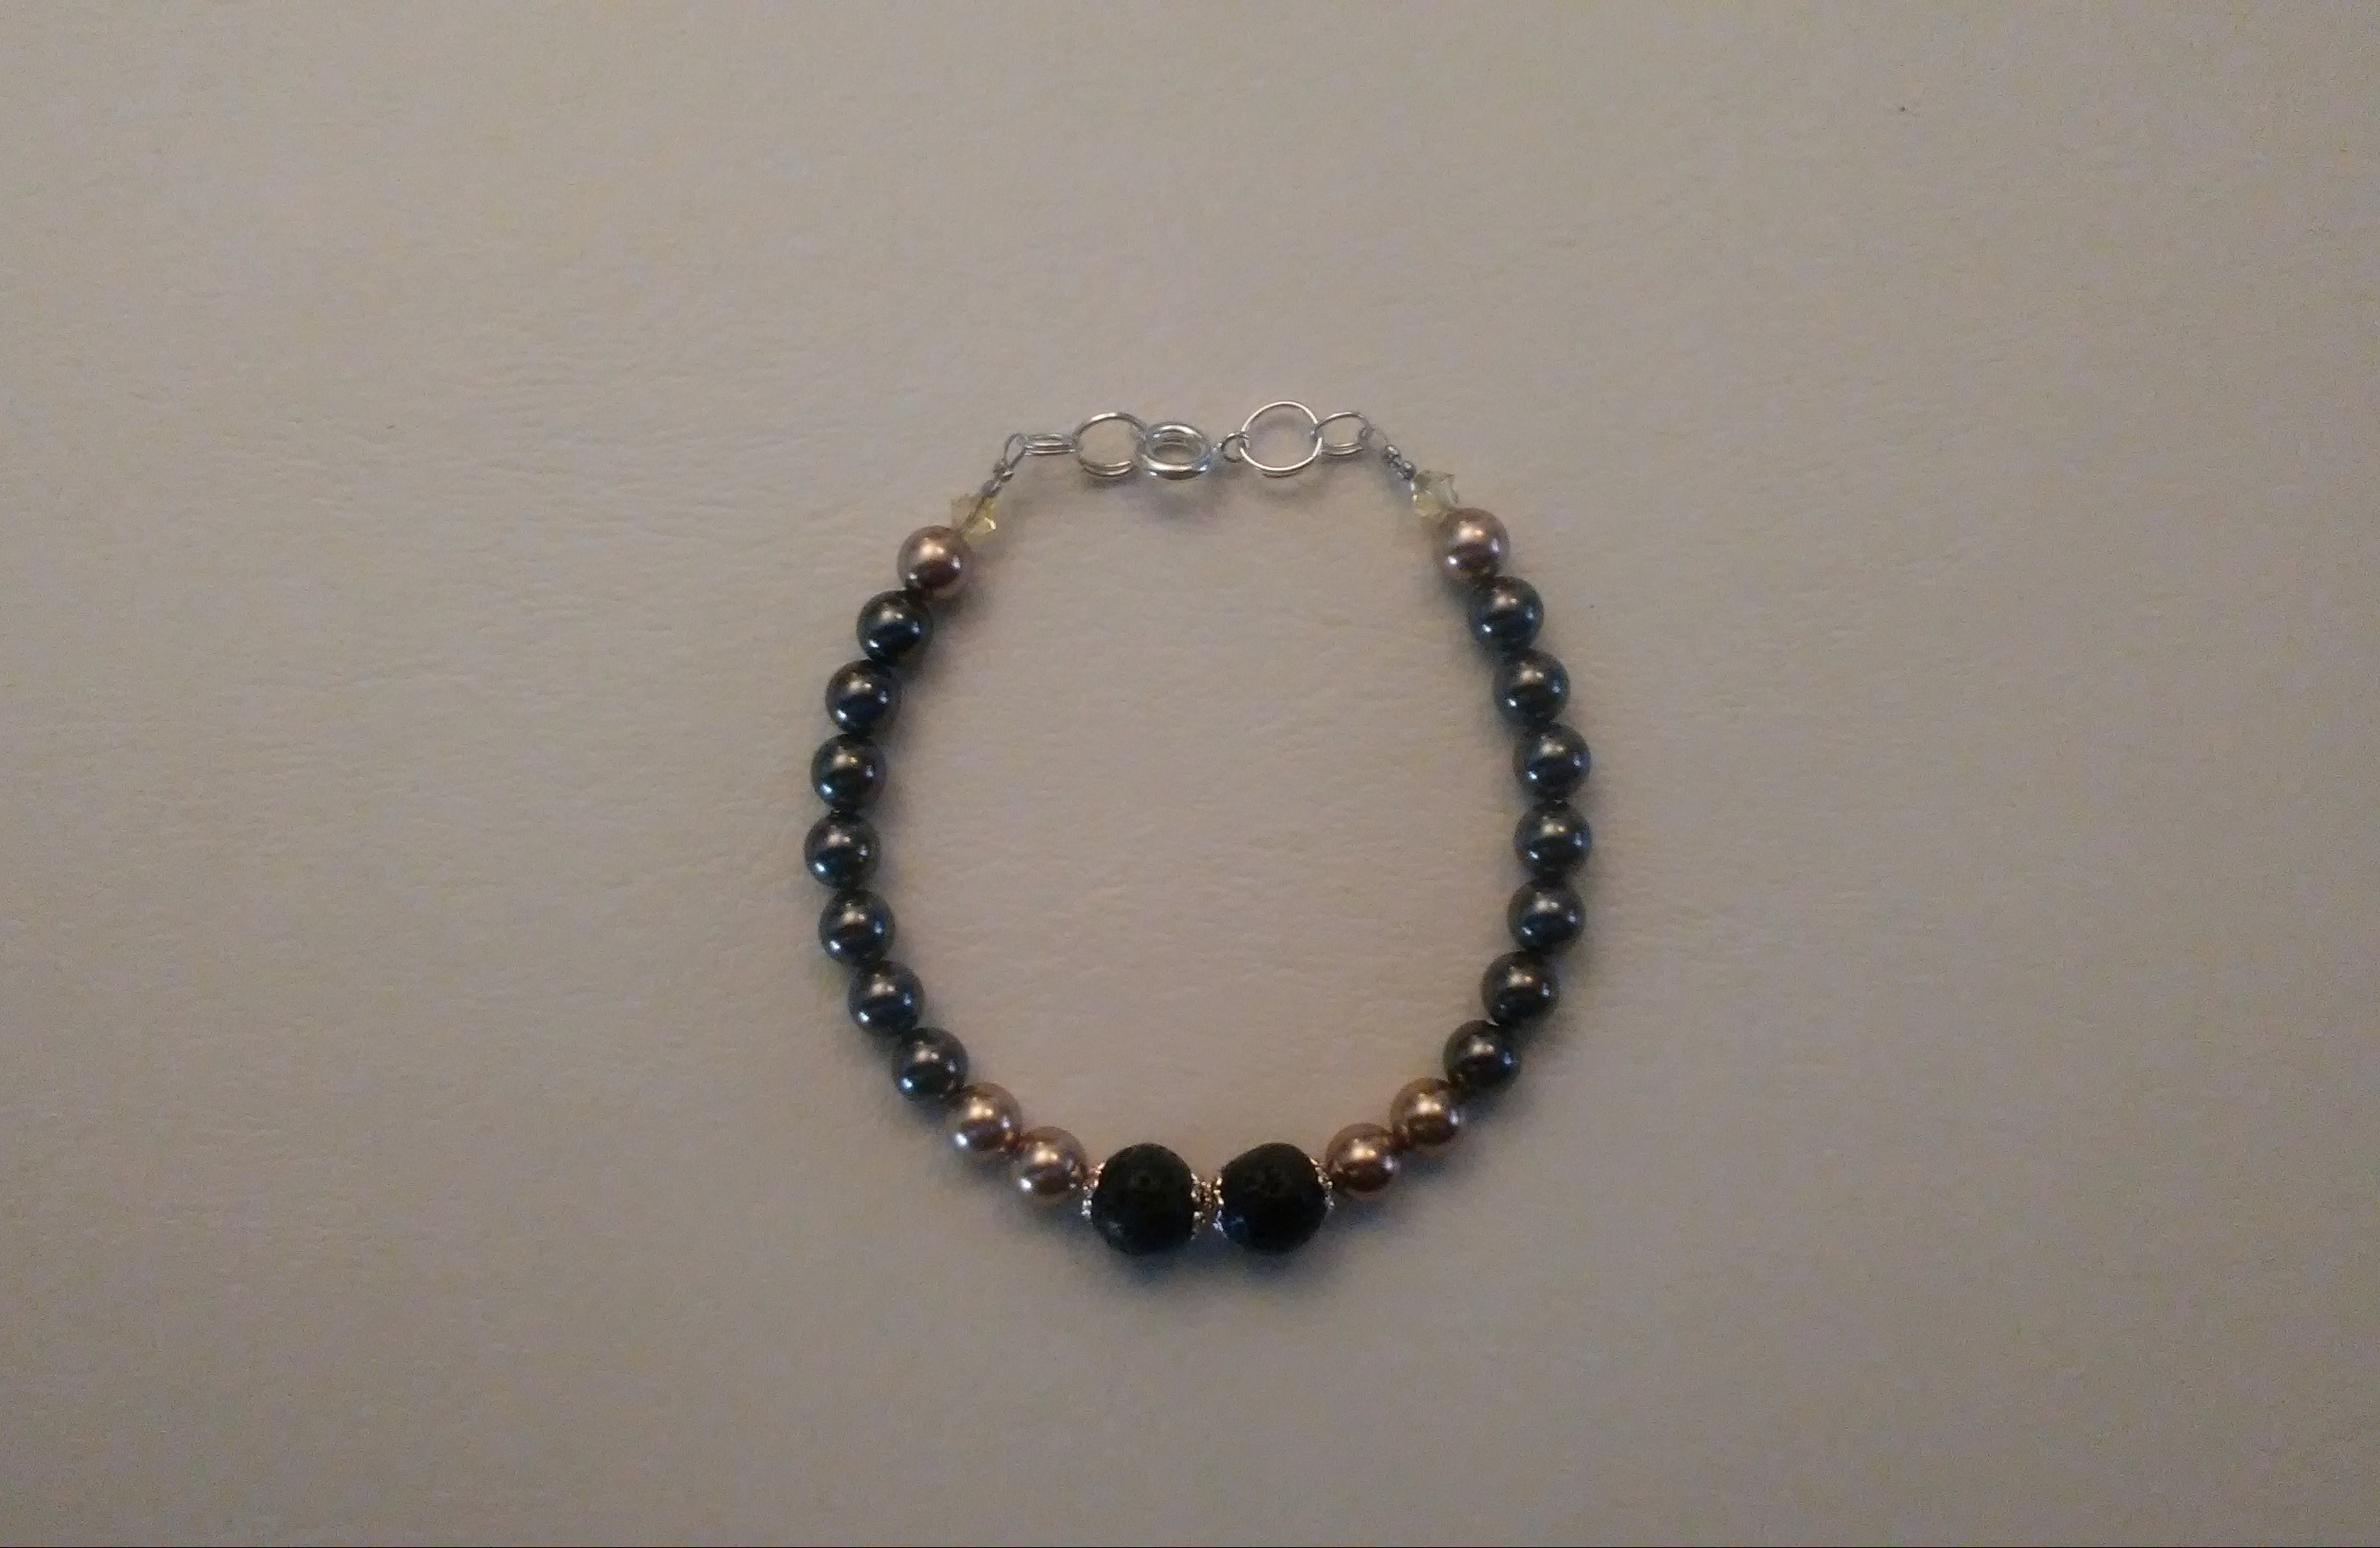 A lava stone and pearl diffuser bracelet.